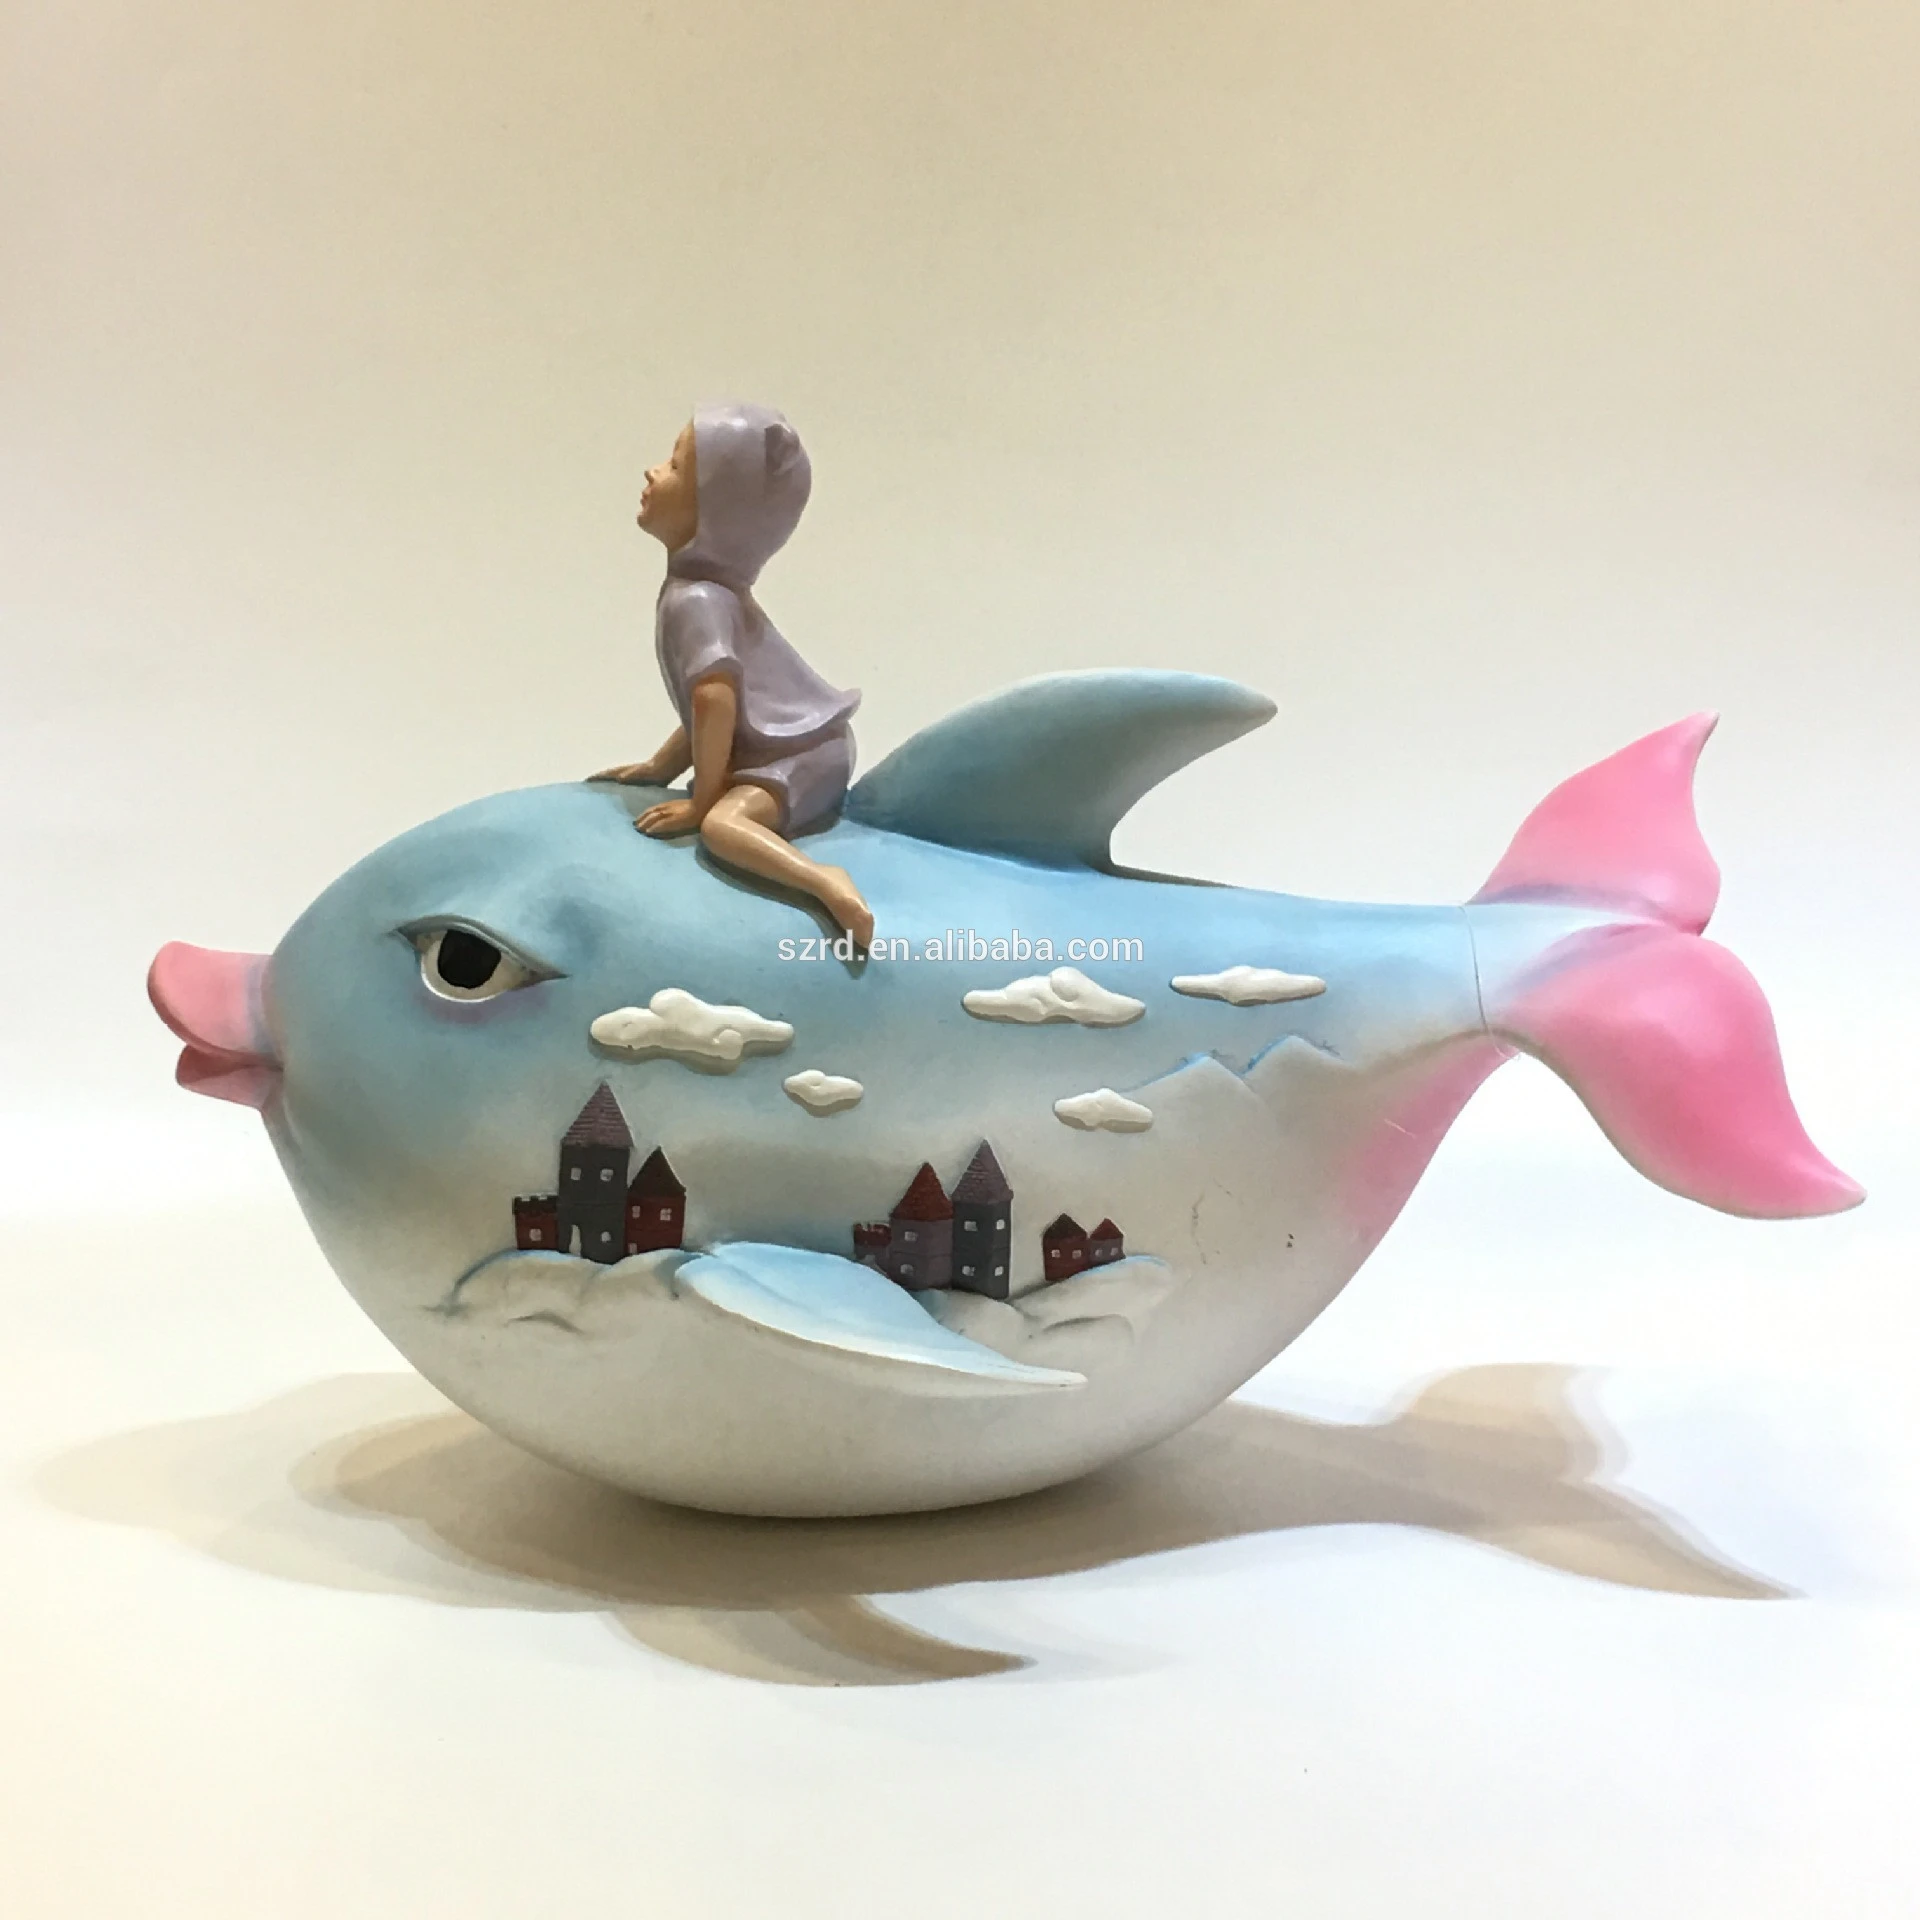 Best sale customized resin shark design artist figures home decoration